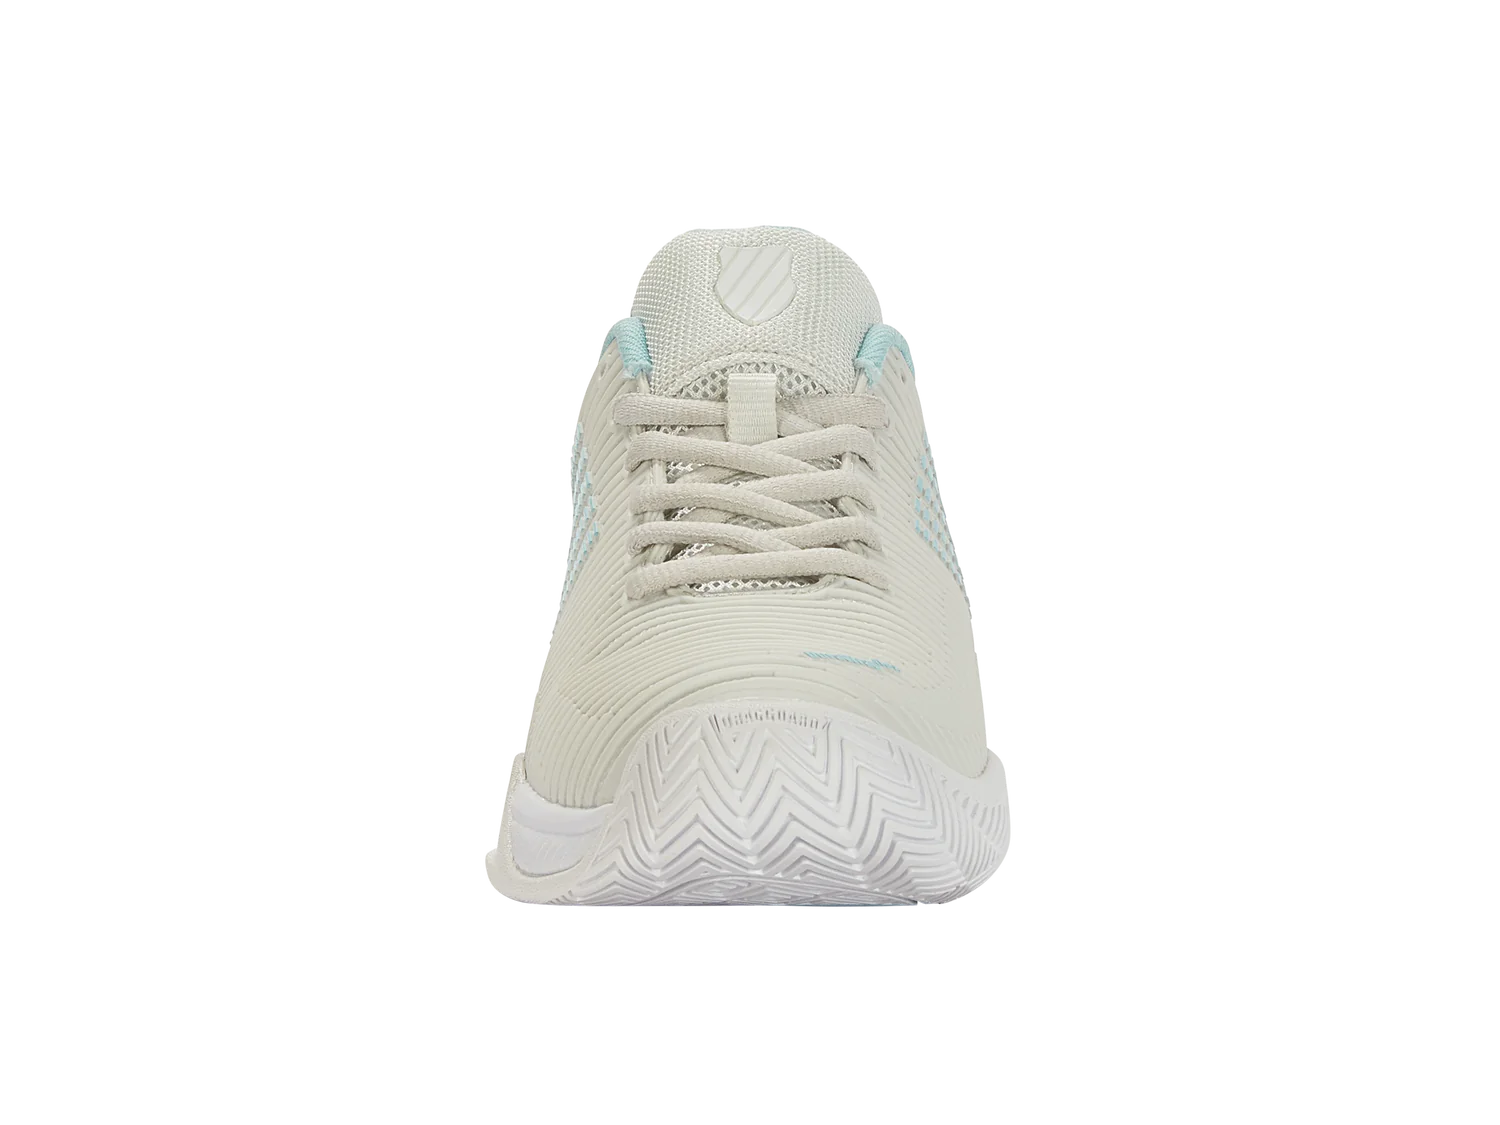 K-Swiss Women's Hypercourt Express 2 Tennis Shoes in Vaporous Gray/White/Blue Glow